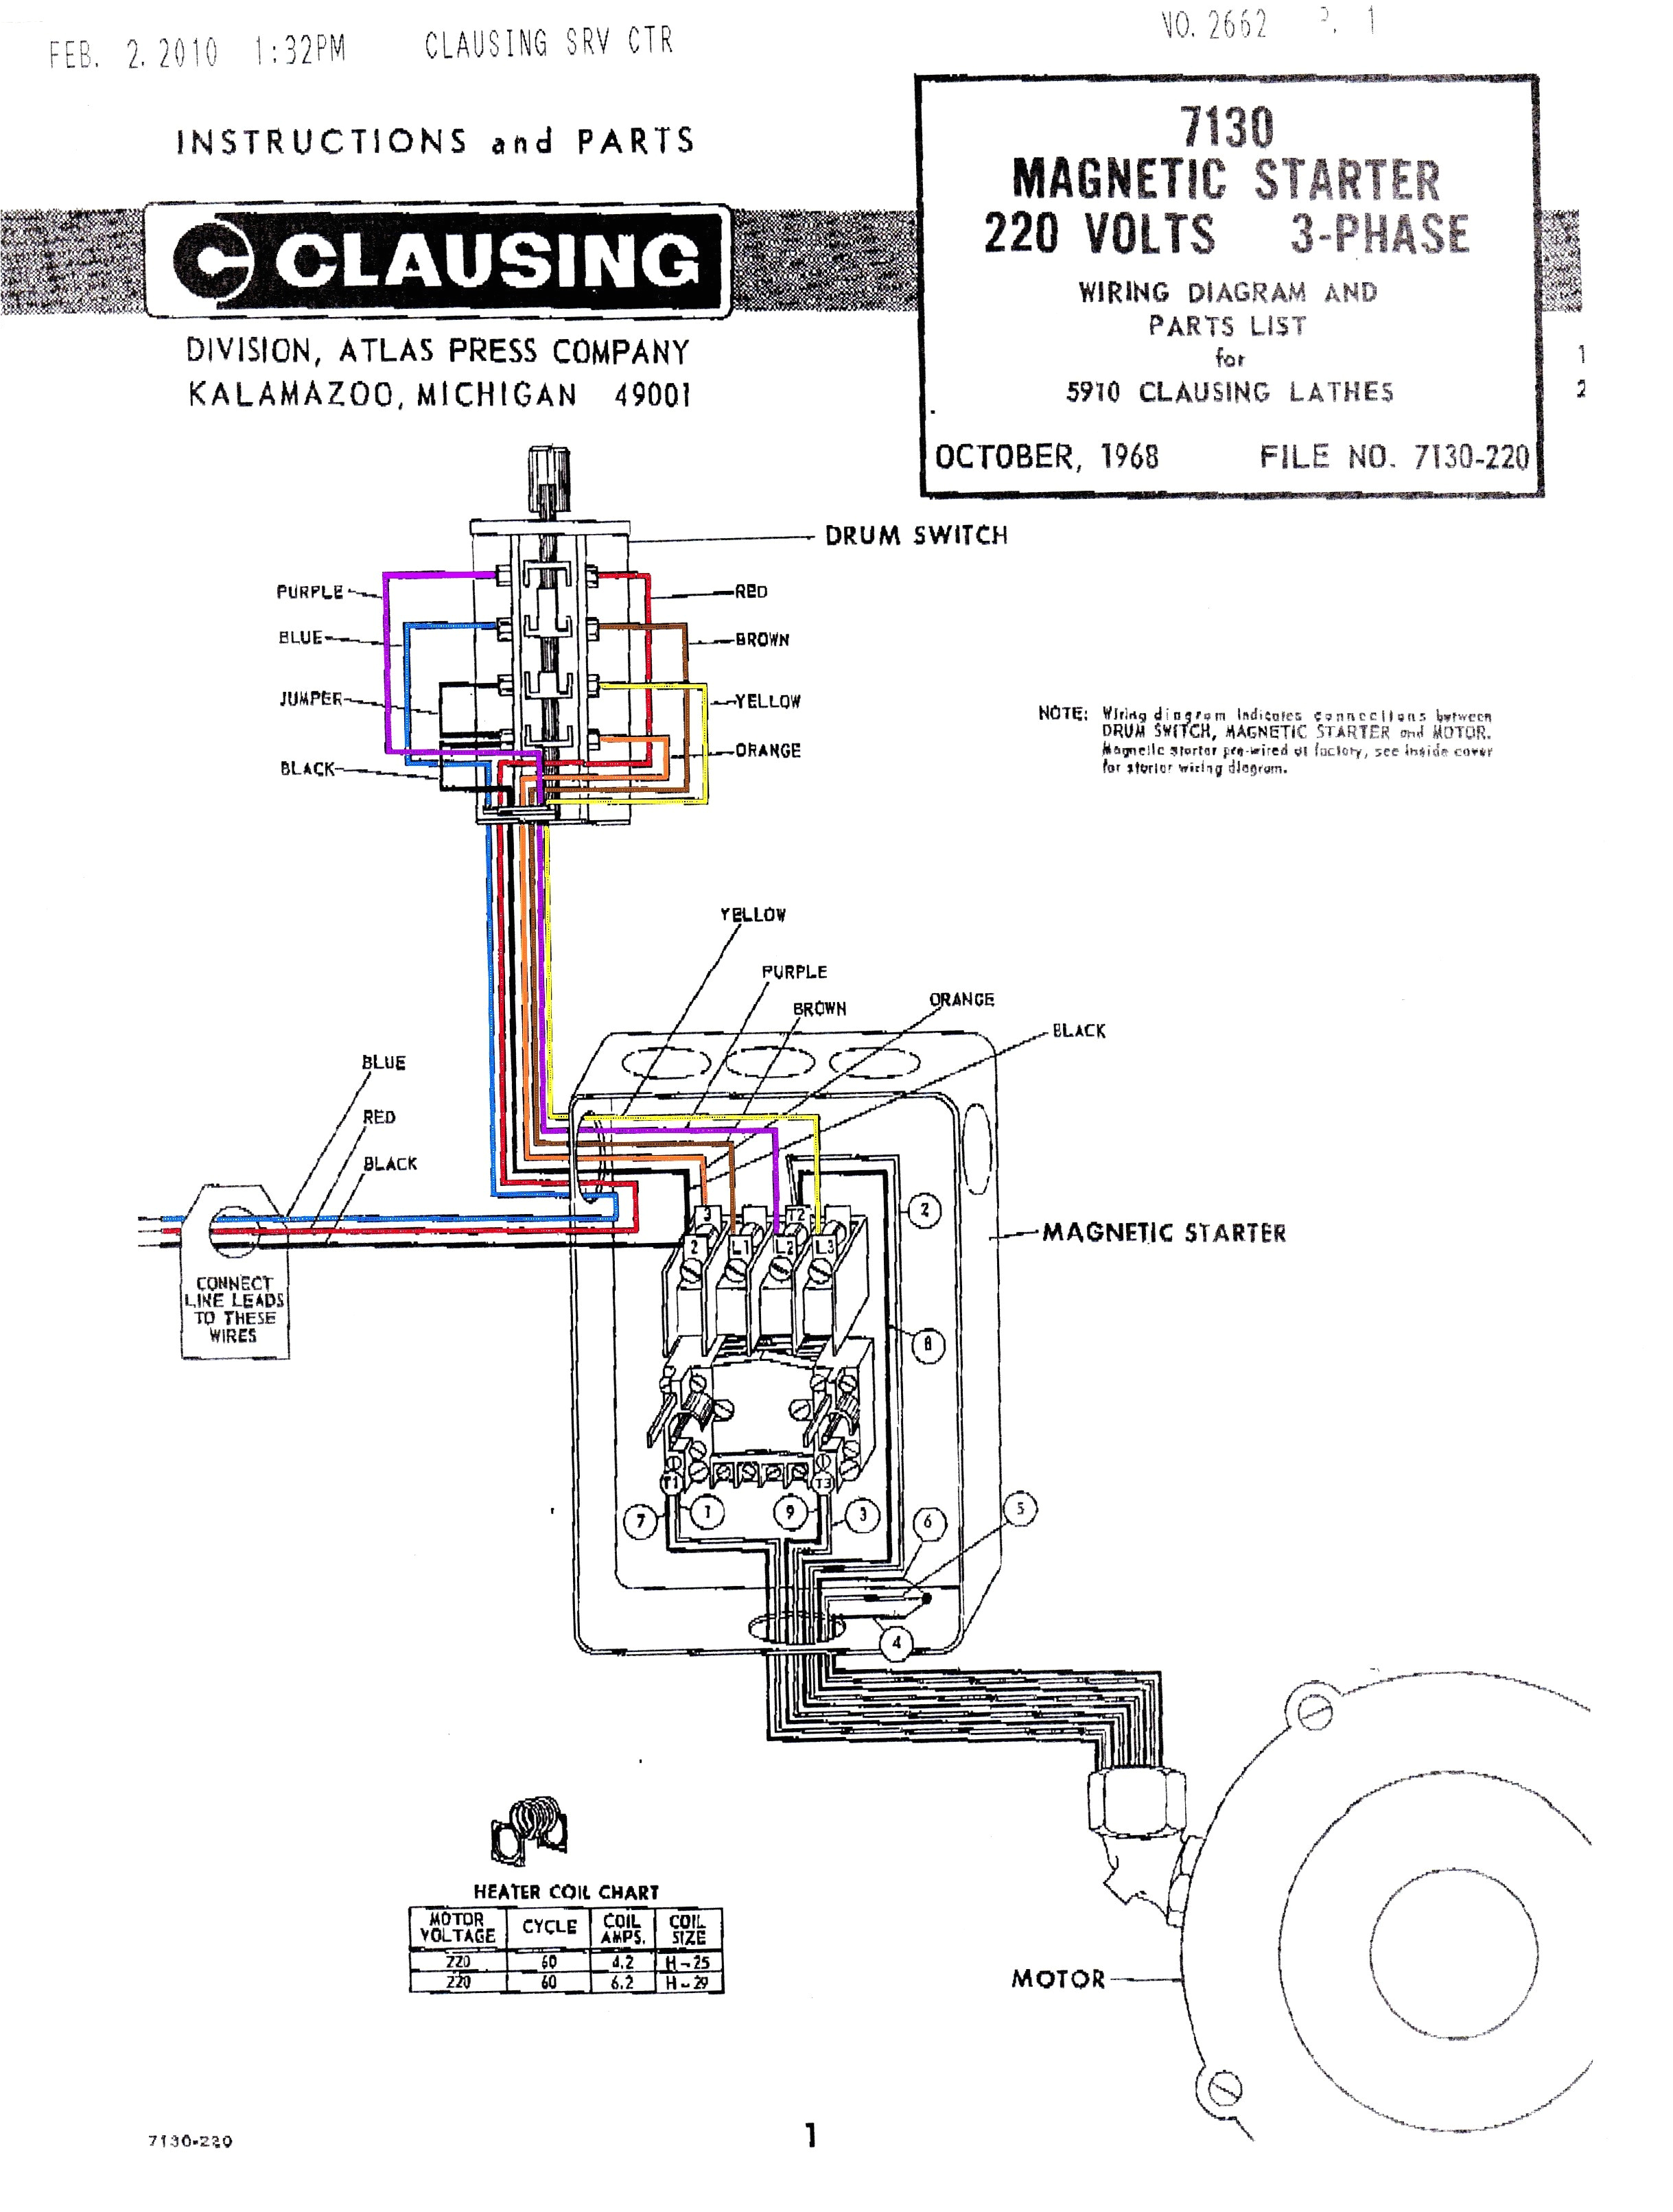 dry motor wiring diagram wiring diagram show dry motor wiring diagram